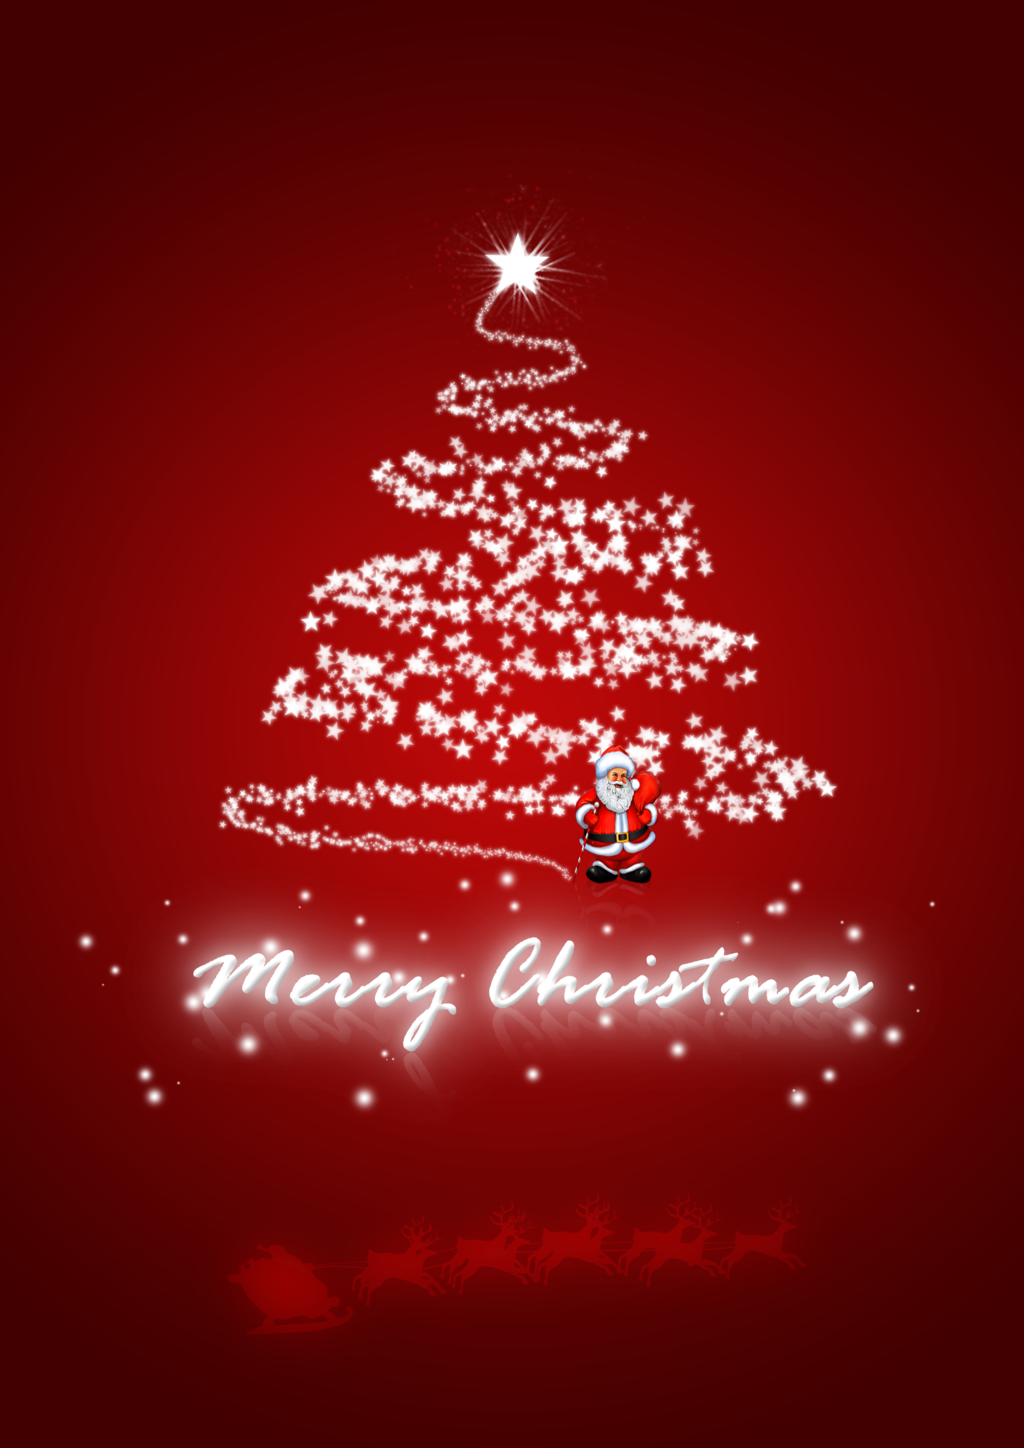 http://3.bp.blogspot.com/-wdtKZ1OQQ7I/Tval8CJjIuI/AAAAAAAAAqY/NKV55Pe4VXo/s1600/Merry_Christmas_by_maniek_07.png